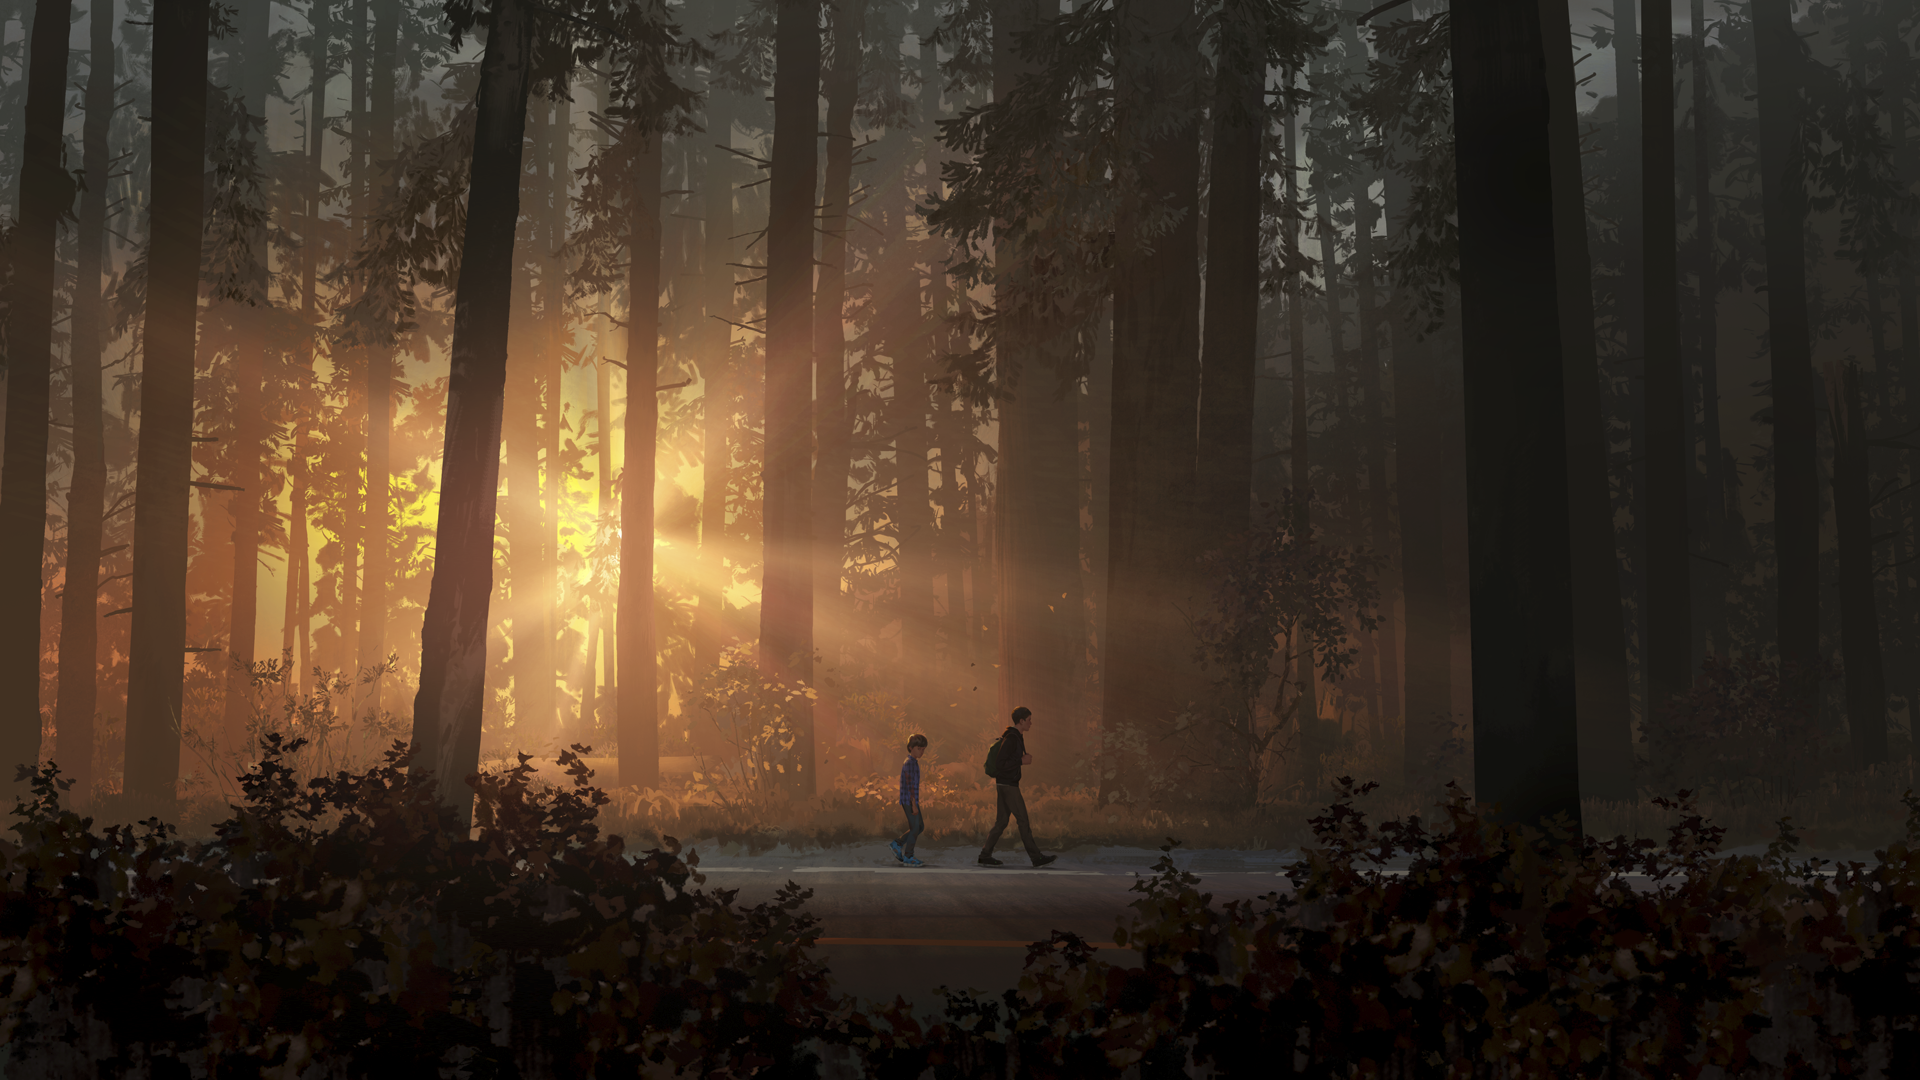 《Life Is Strange 2》首图美术设计，两个男孩沿着小路穿越阳光洒落的森林